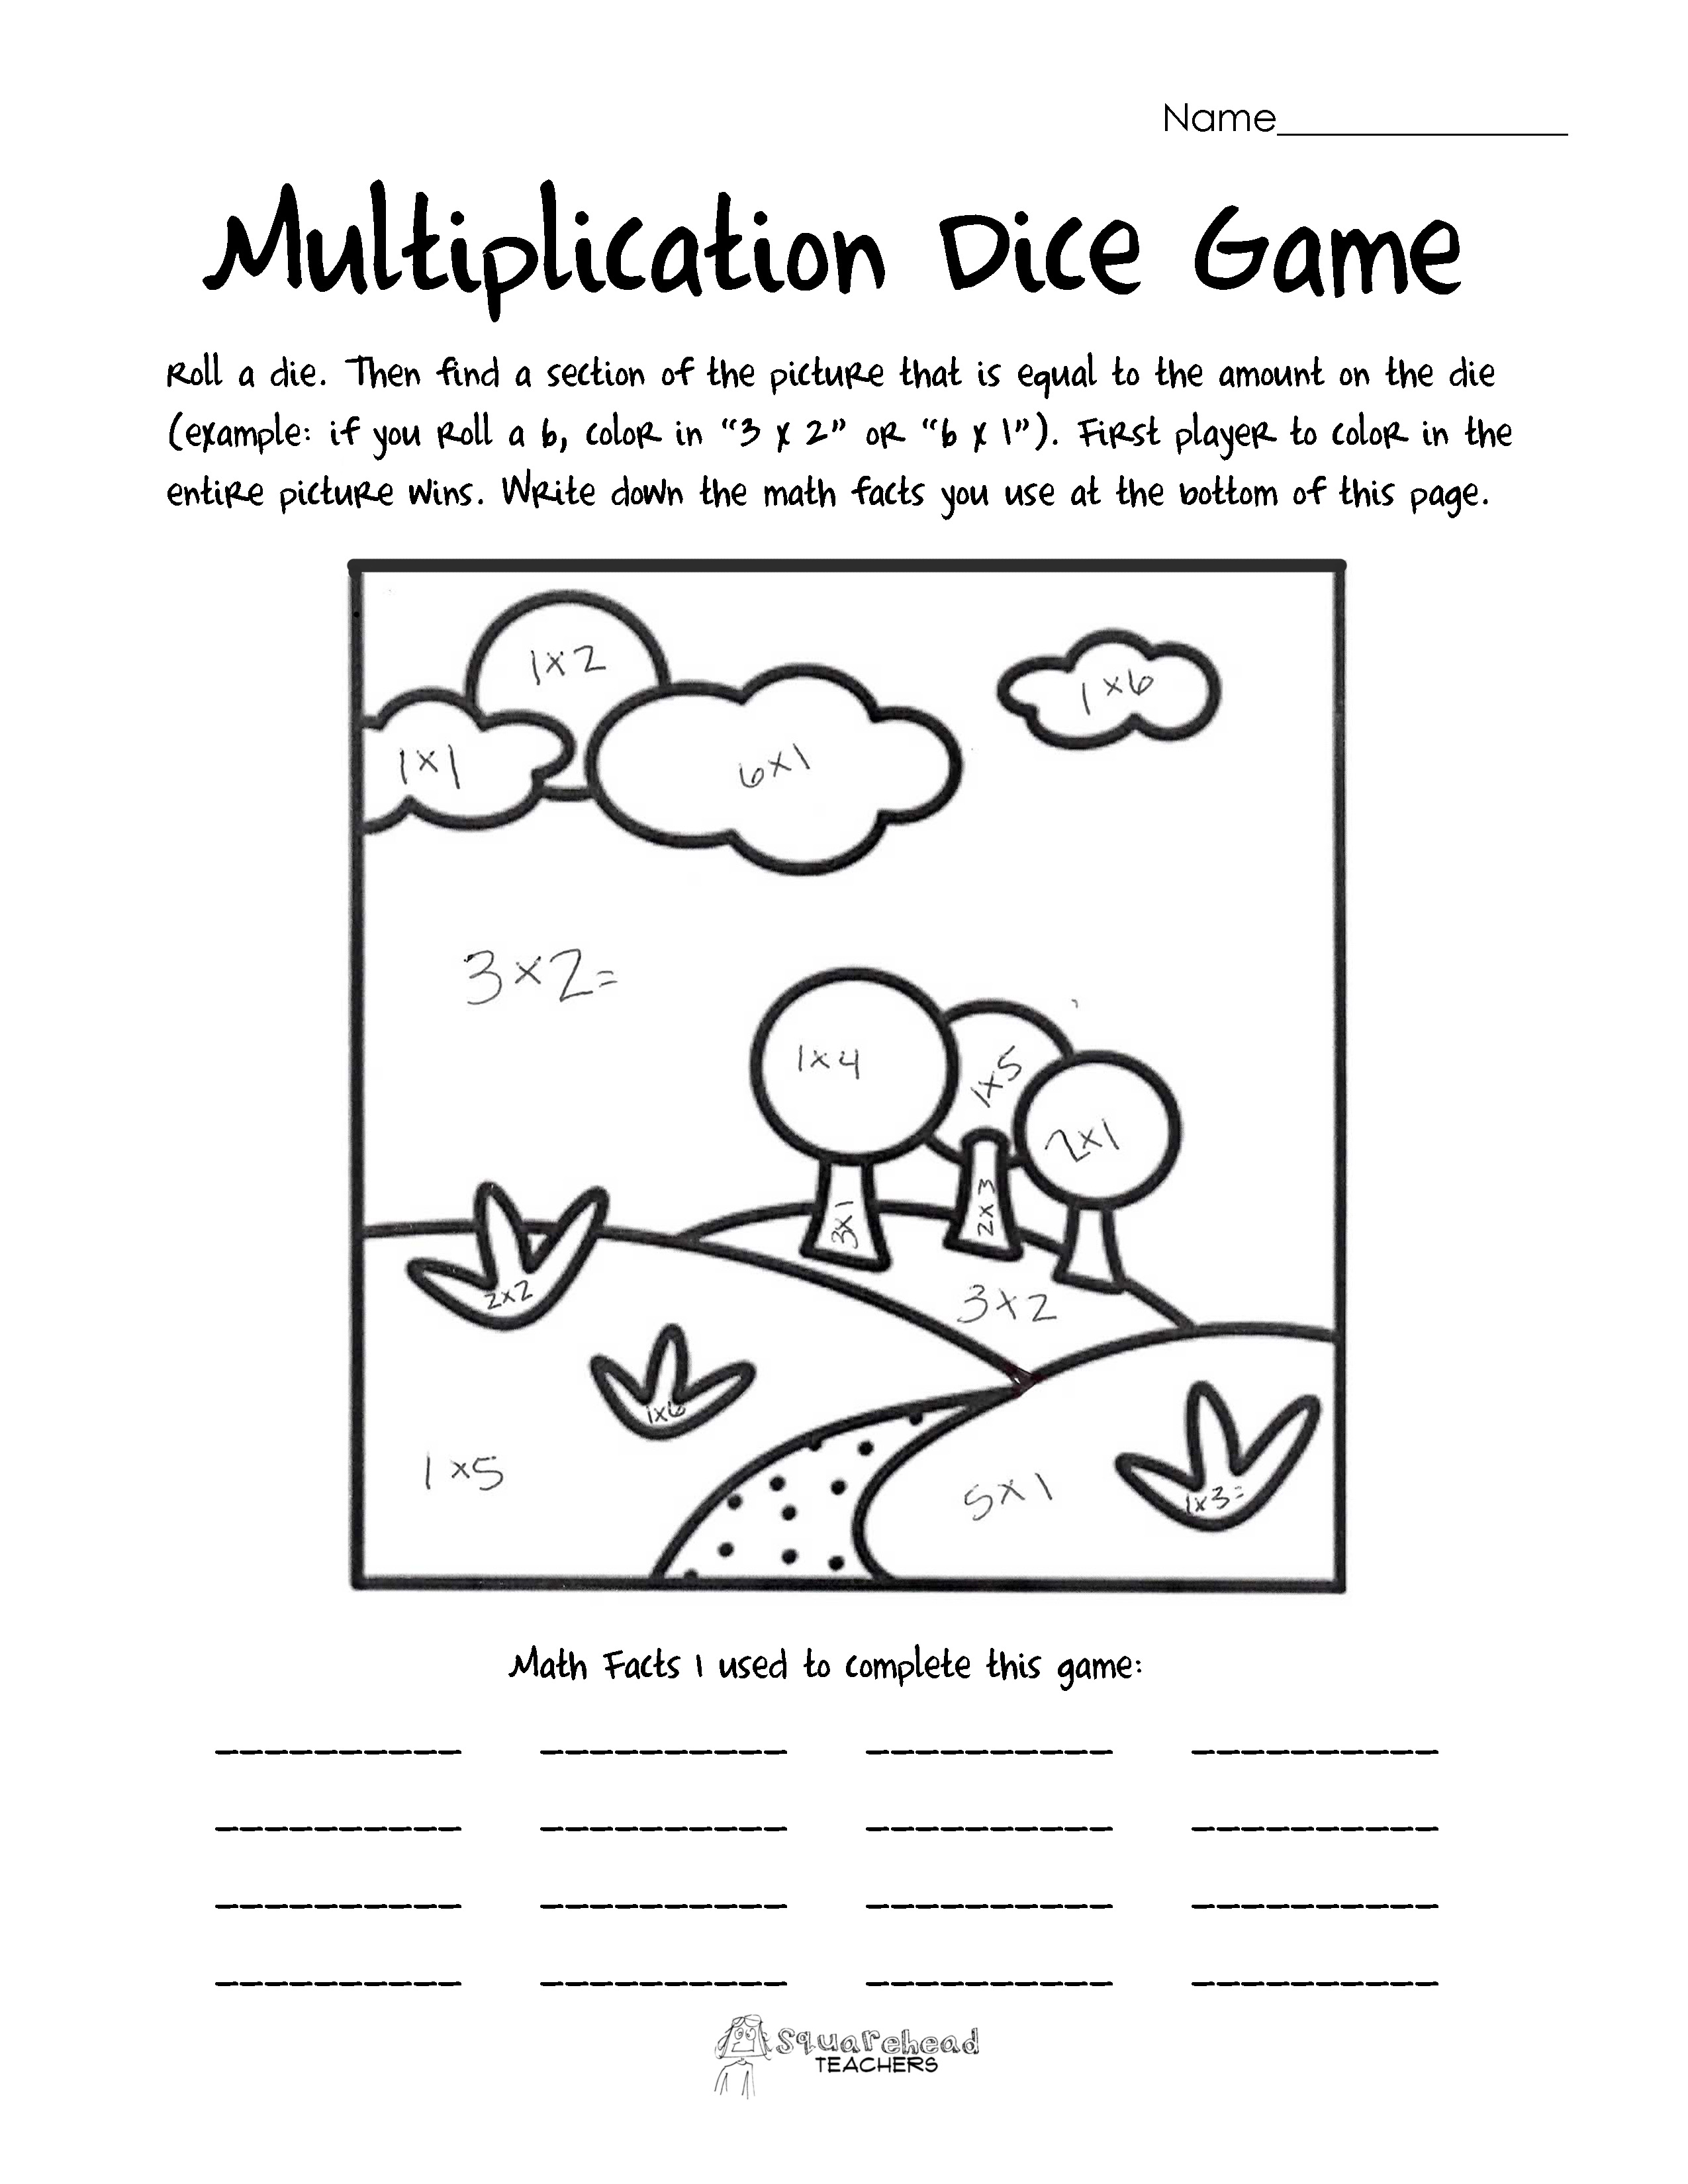 Printable Table Worksheet Multiplication Games Dice Image